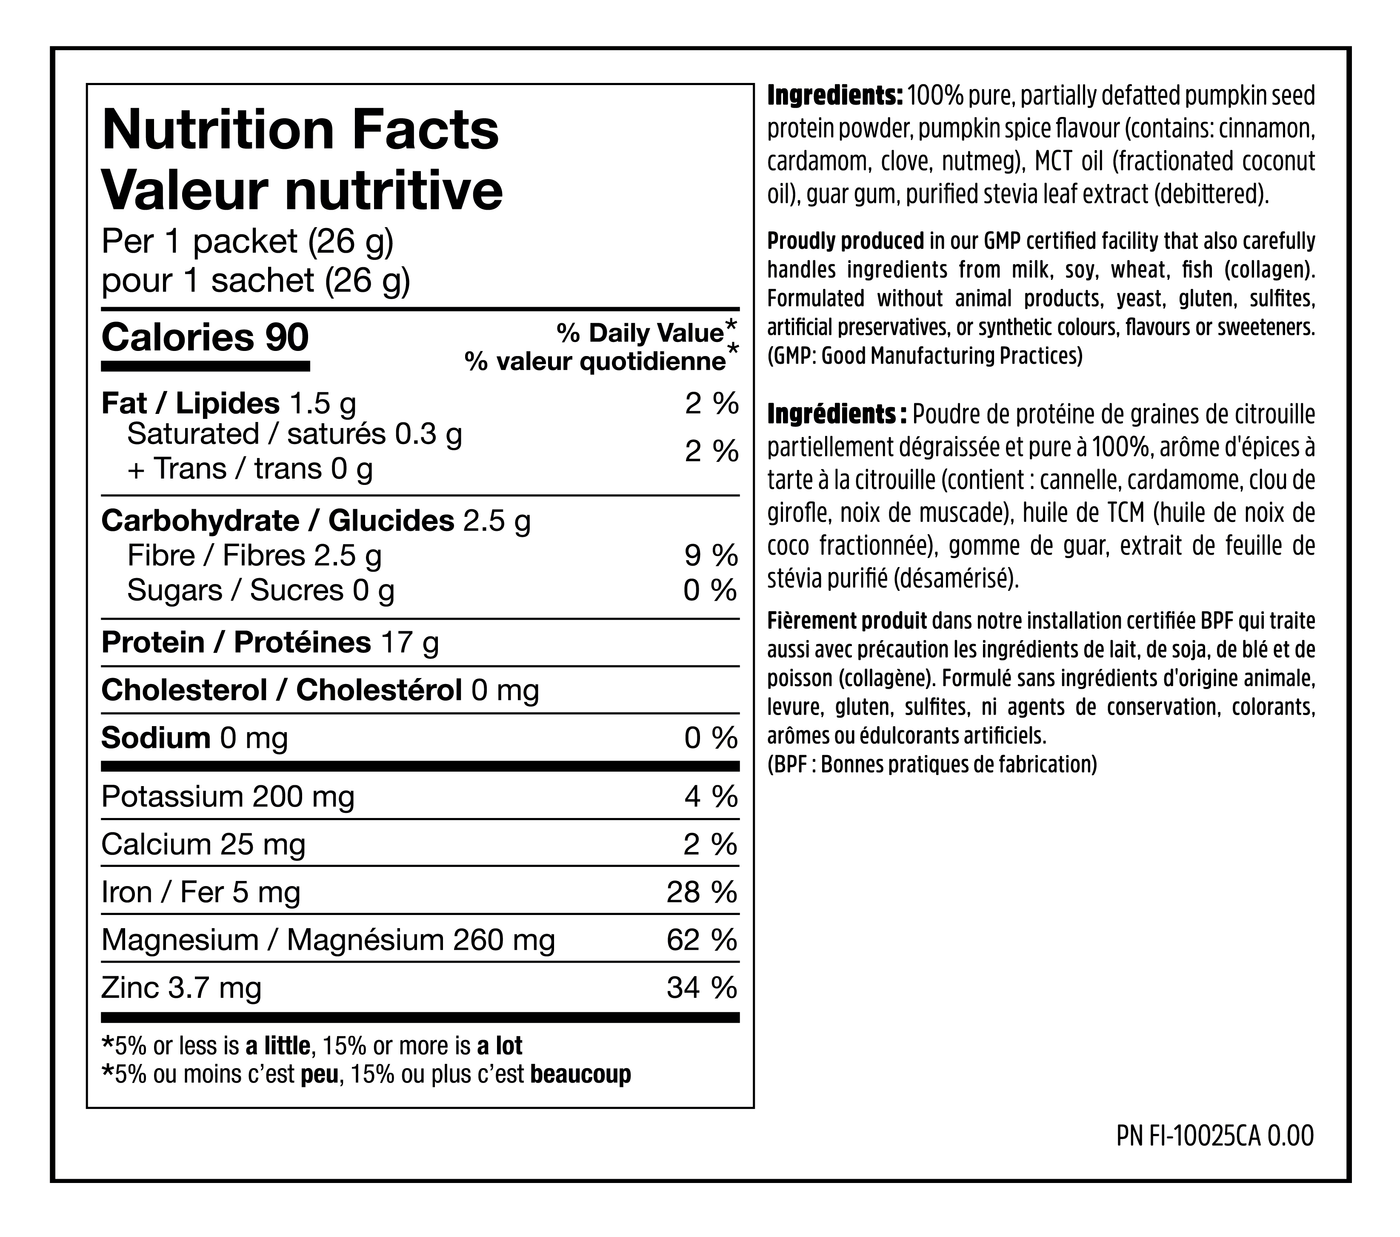 Cold Pressed Pumpkin Protein - 26g - Pumpkin Spice - Nutrition Facts